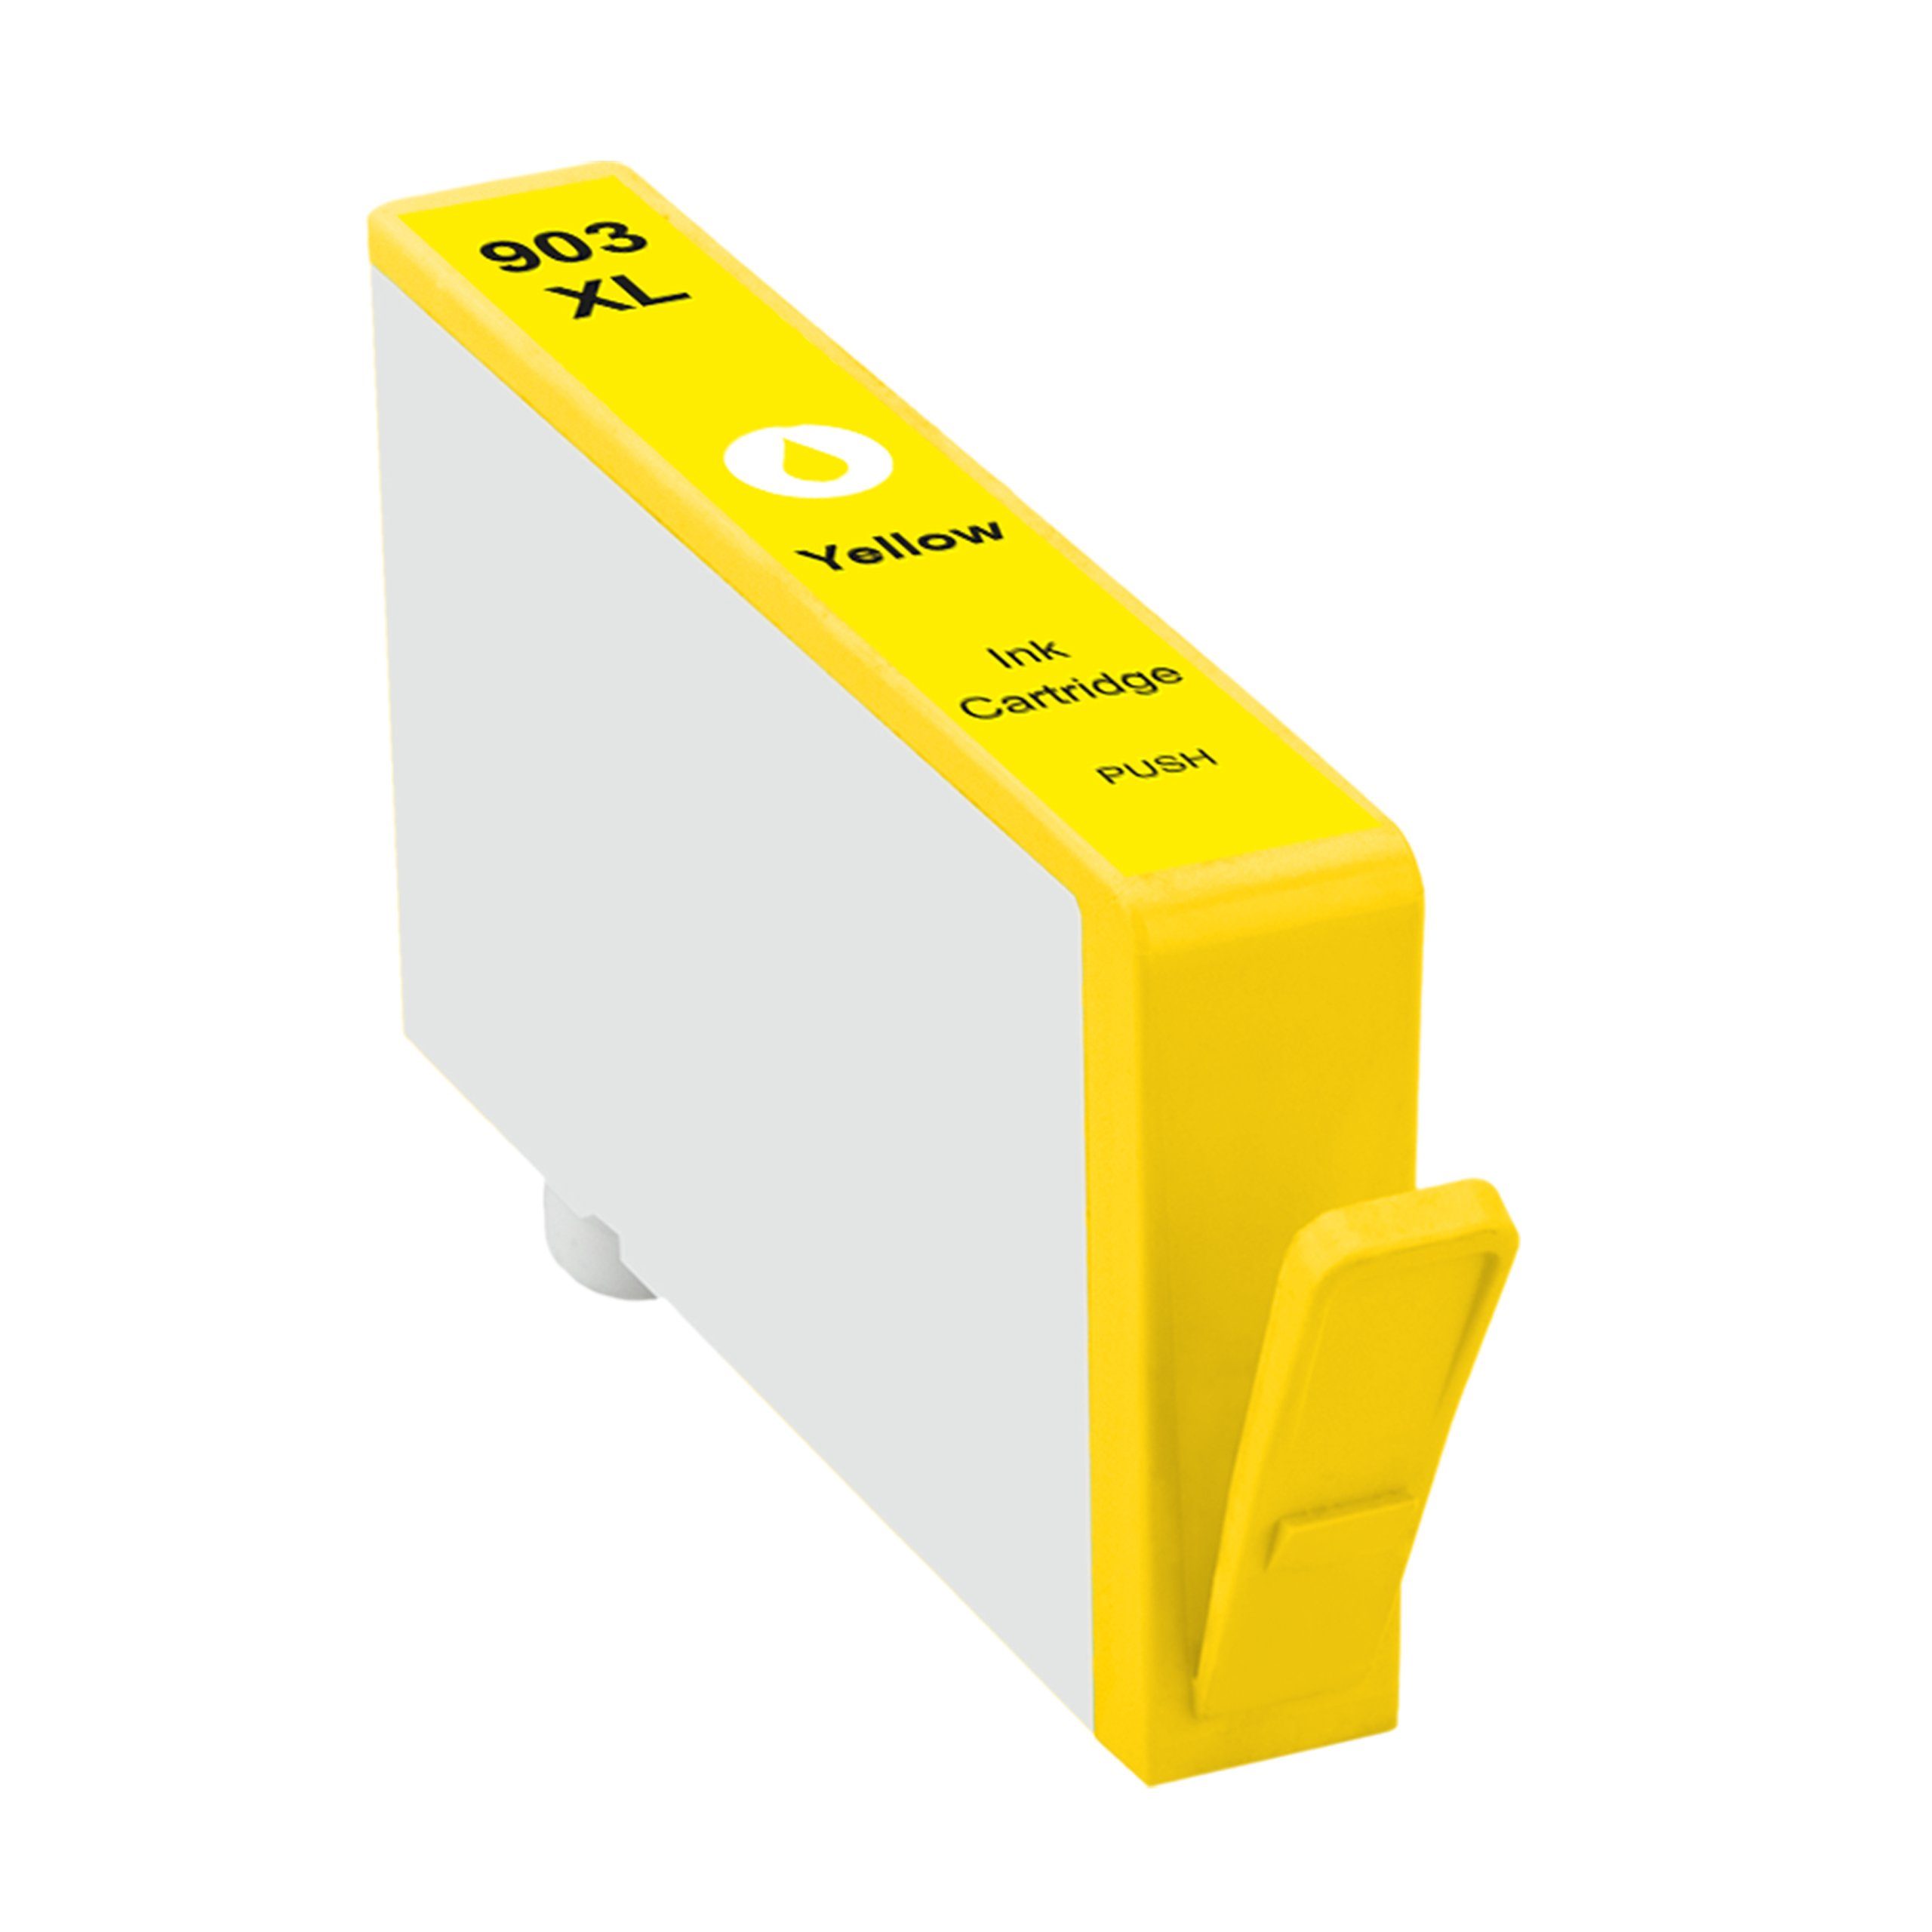 ersetzt NINETEC HP 903XL Tintenpatrone Yellow (T6M11AE) 903 XL